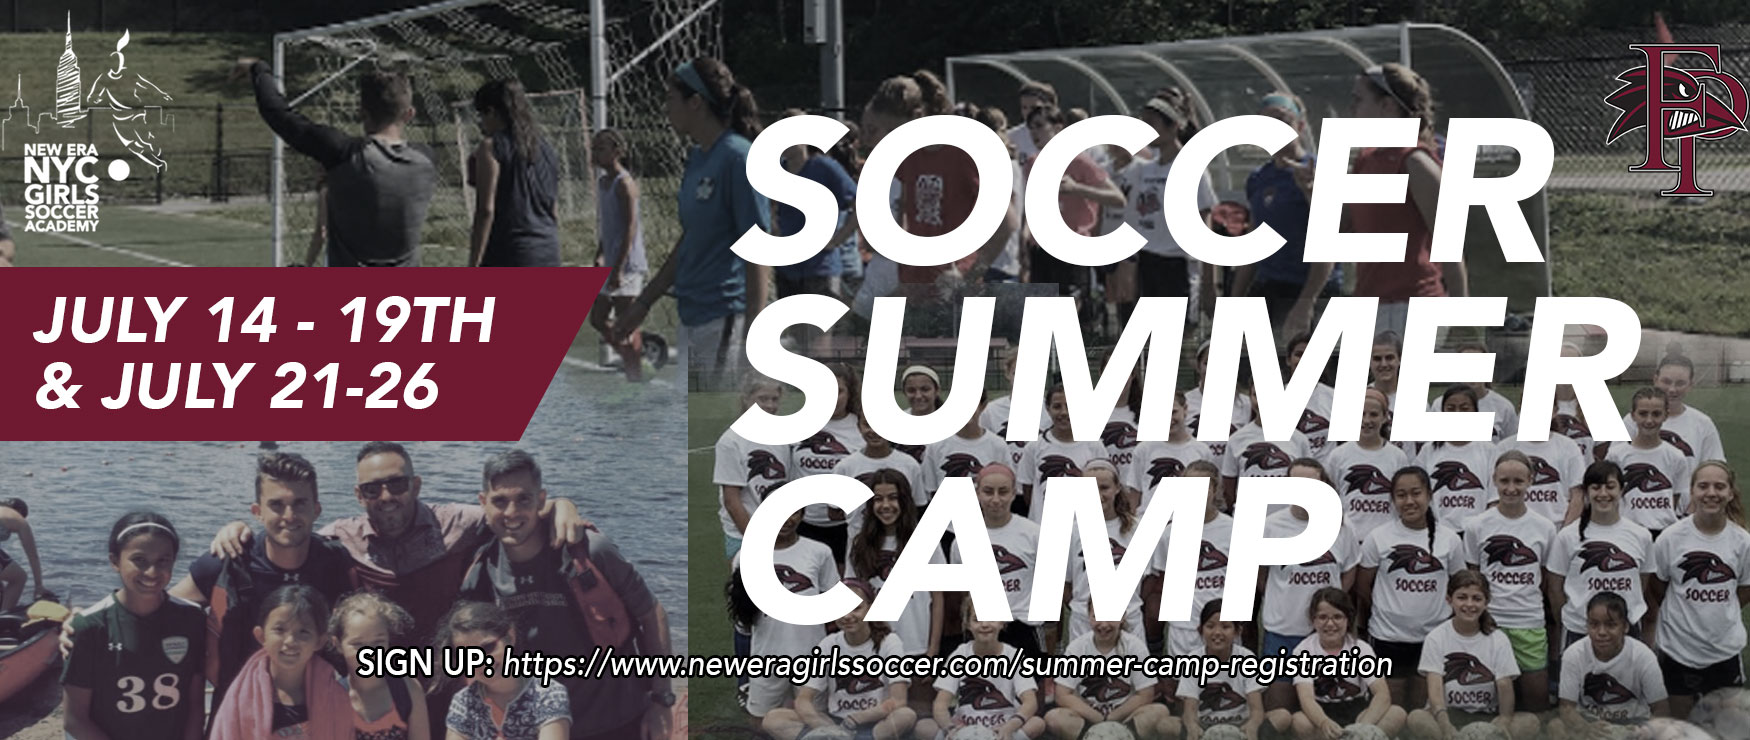 New Era Girls Soccer and Franklin Pierce University Present Soccer Summer Camp July 14-26